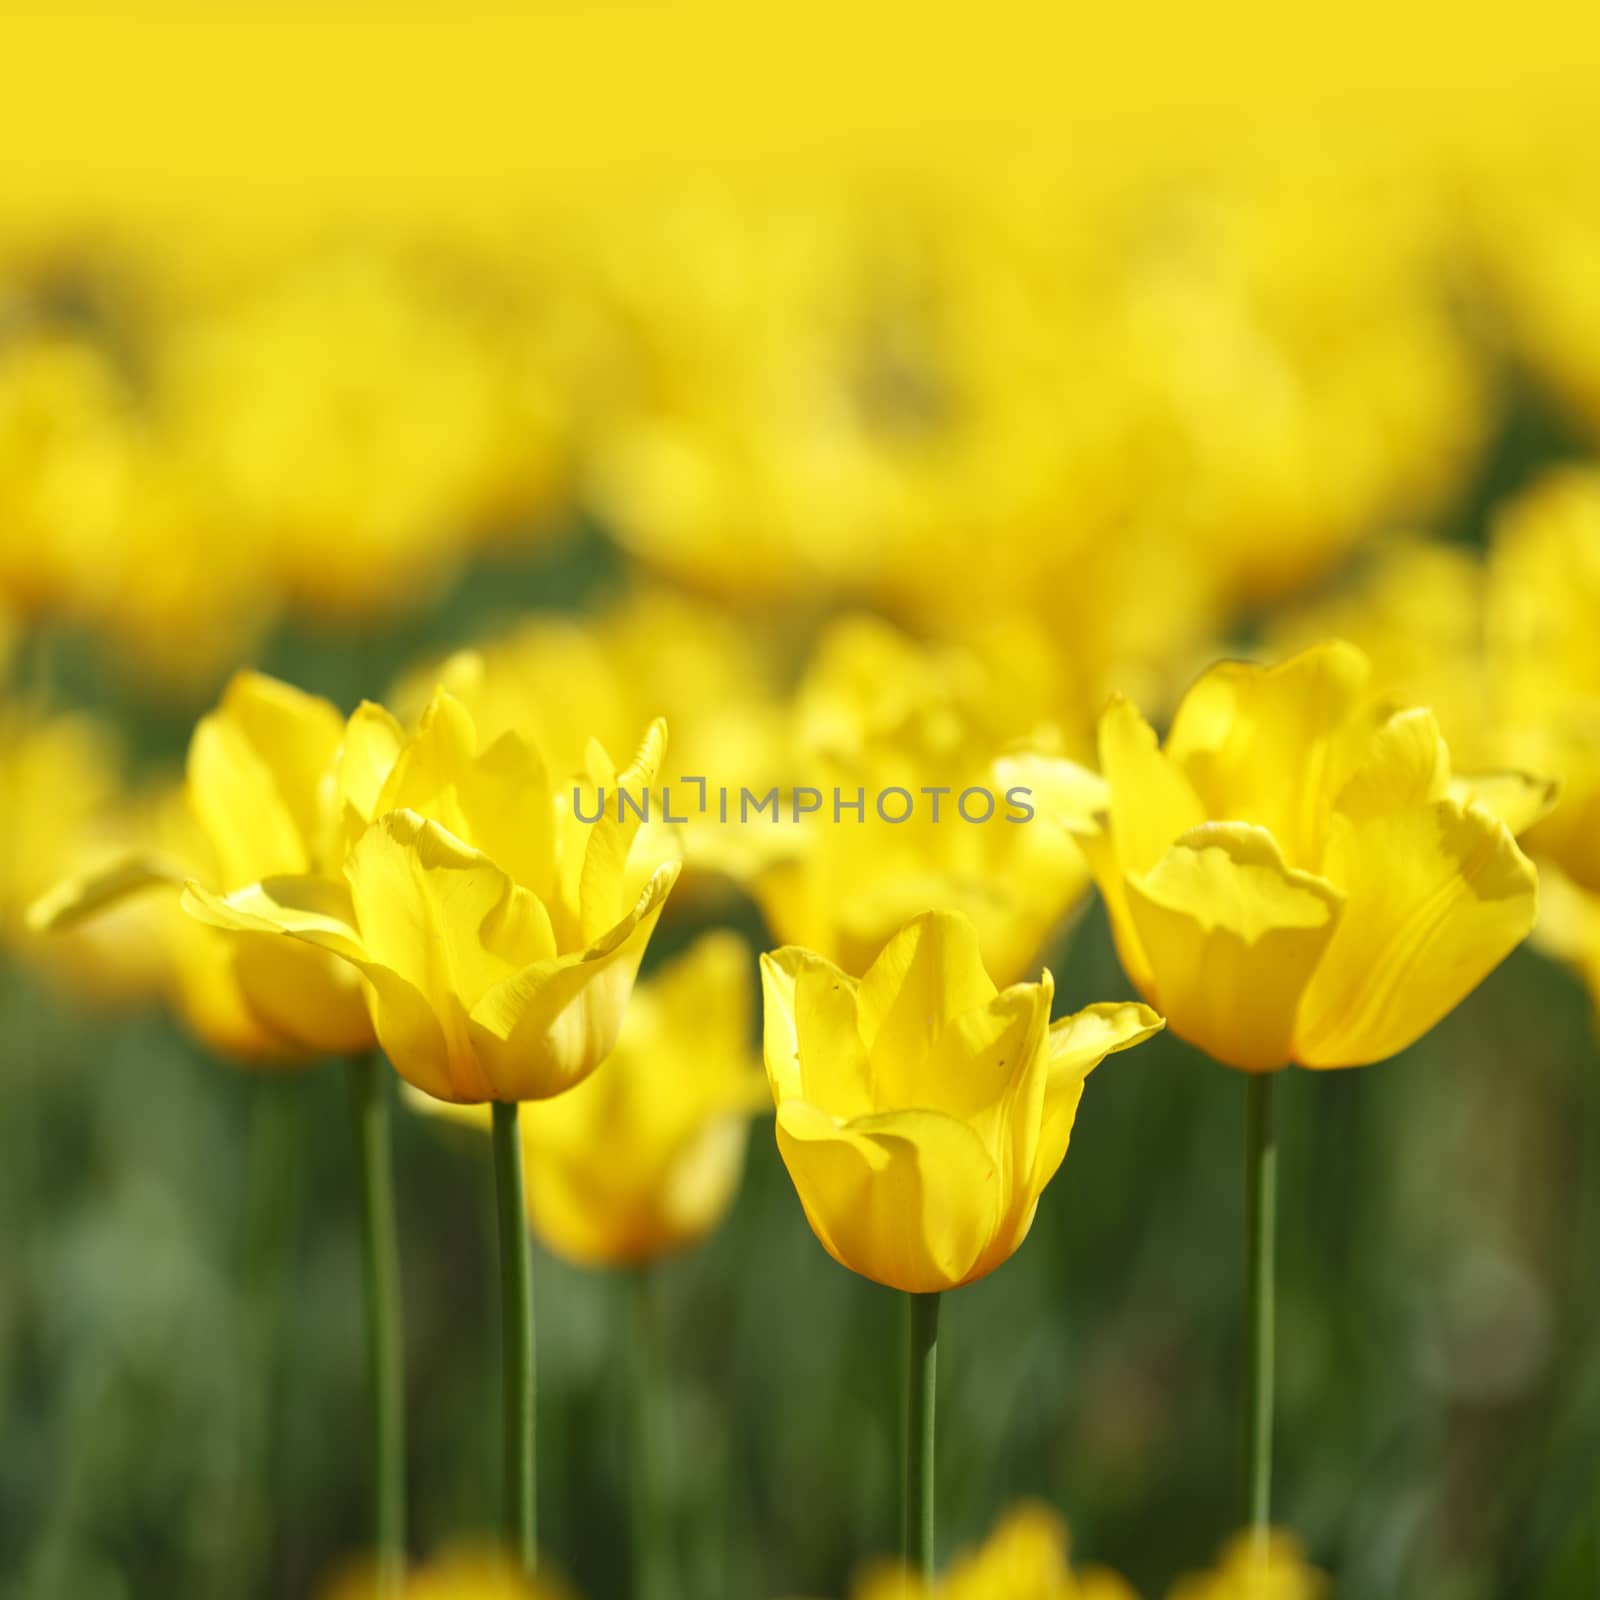 Fresh yellow tulips in garden close-up